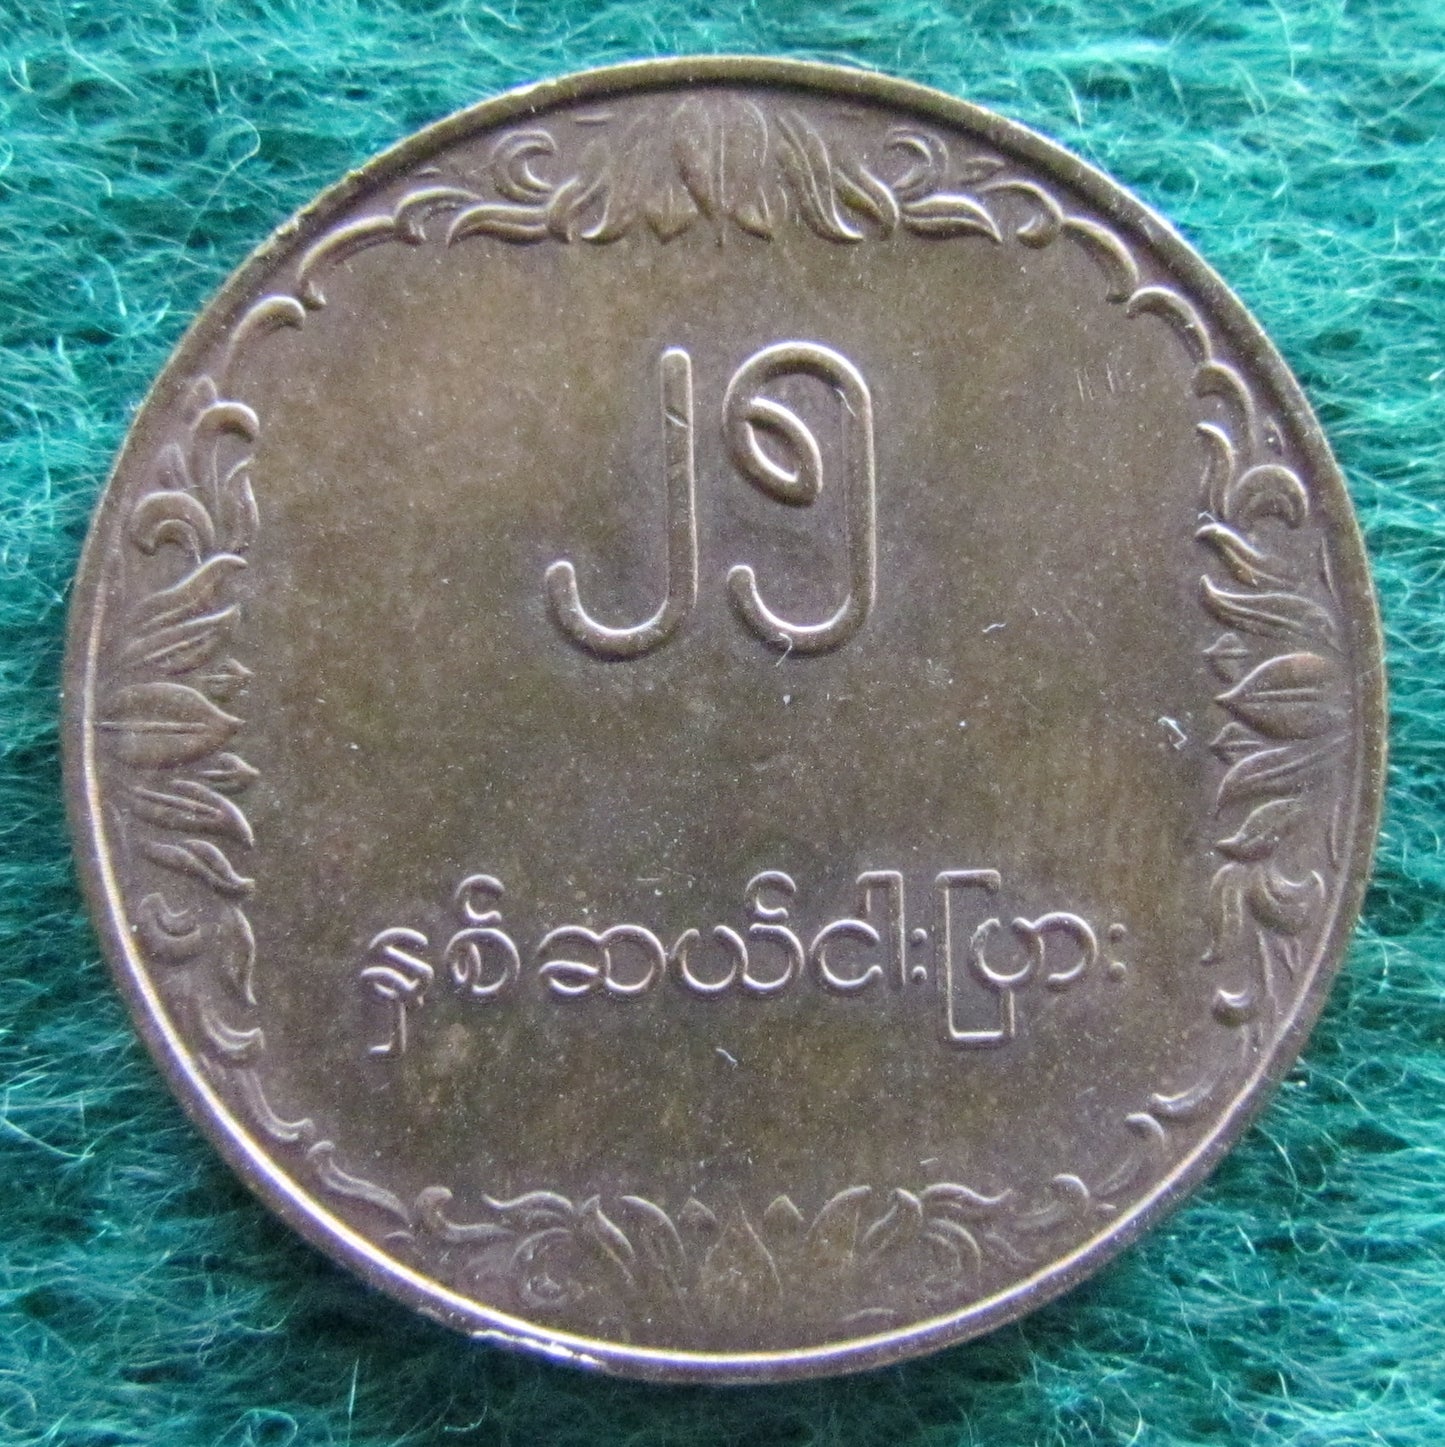 Burma 1980 25 Pyas Coin - Circulated